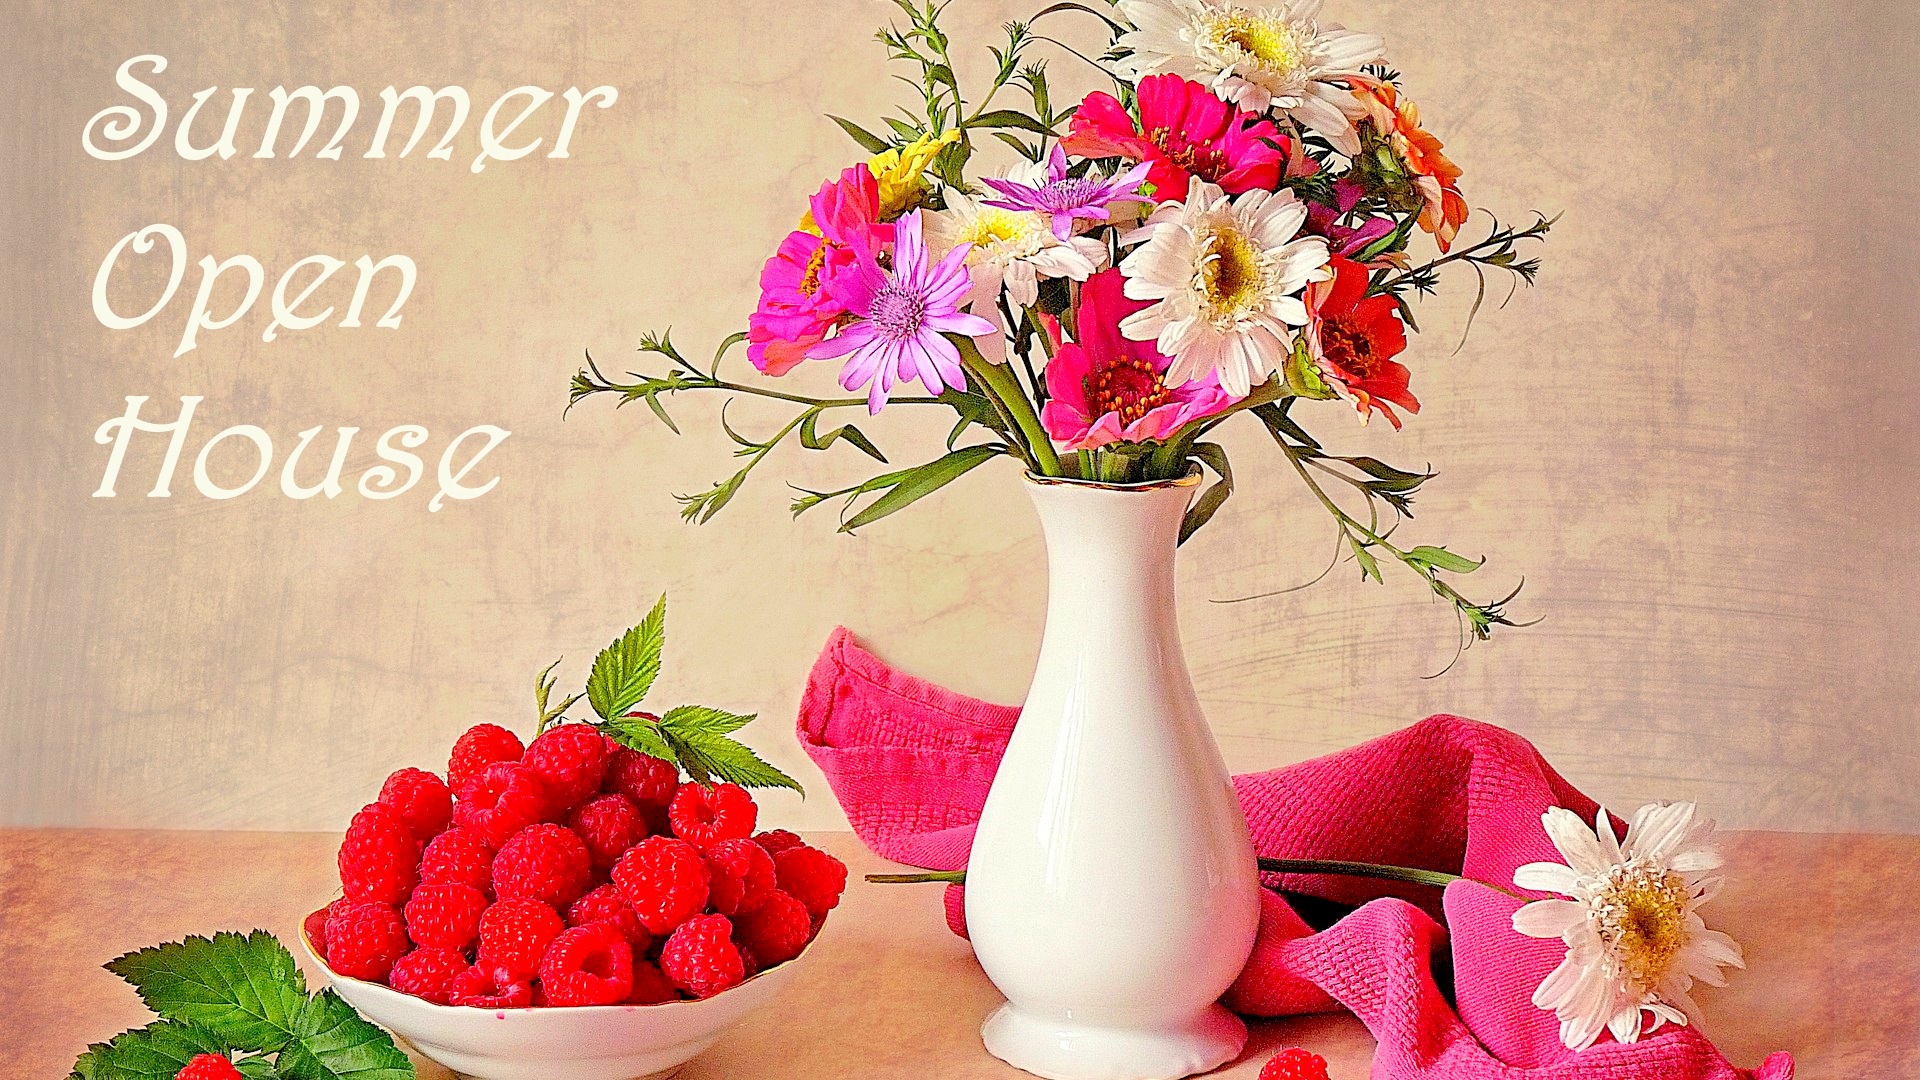 Summer Open House adapted from Google image http://renatures.com/life-flowers-summer-fruit-vase-pretty-still-wallpaper-hd/